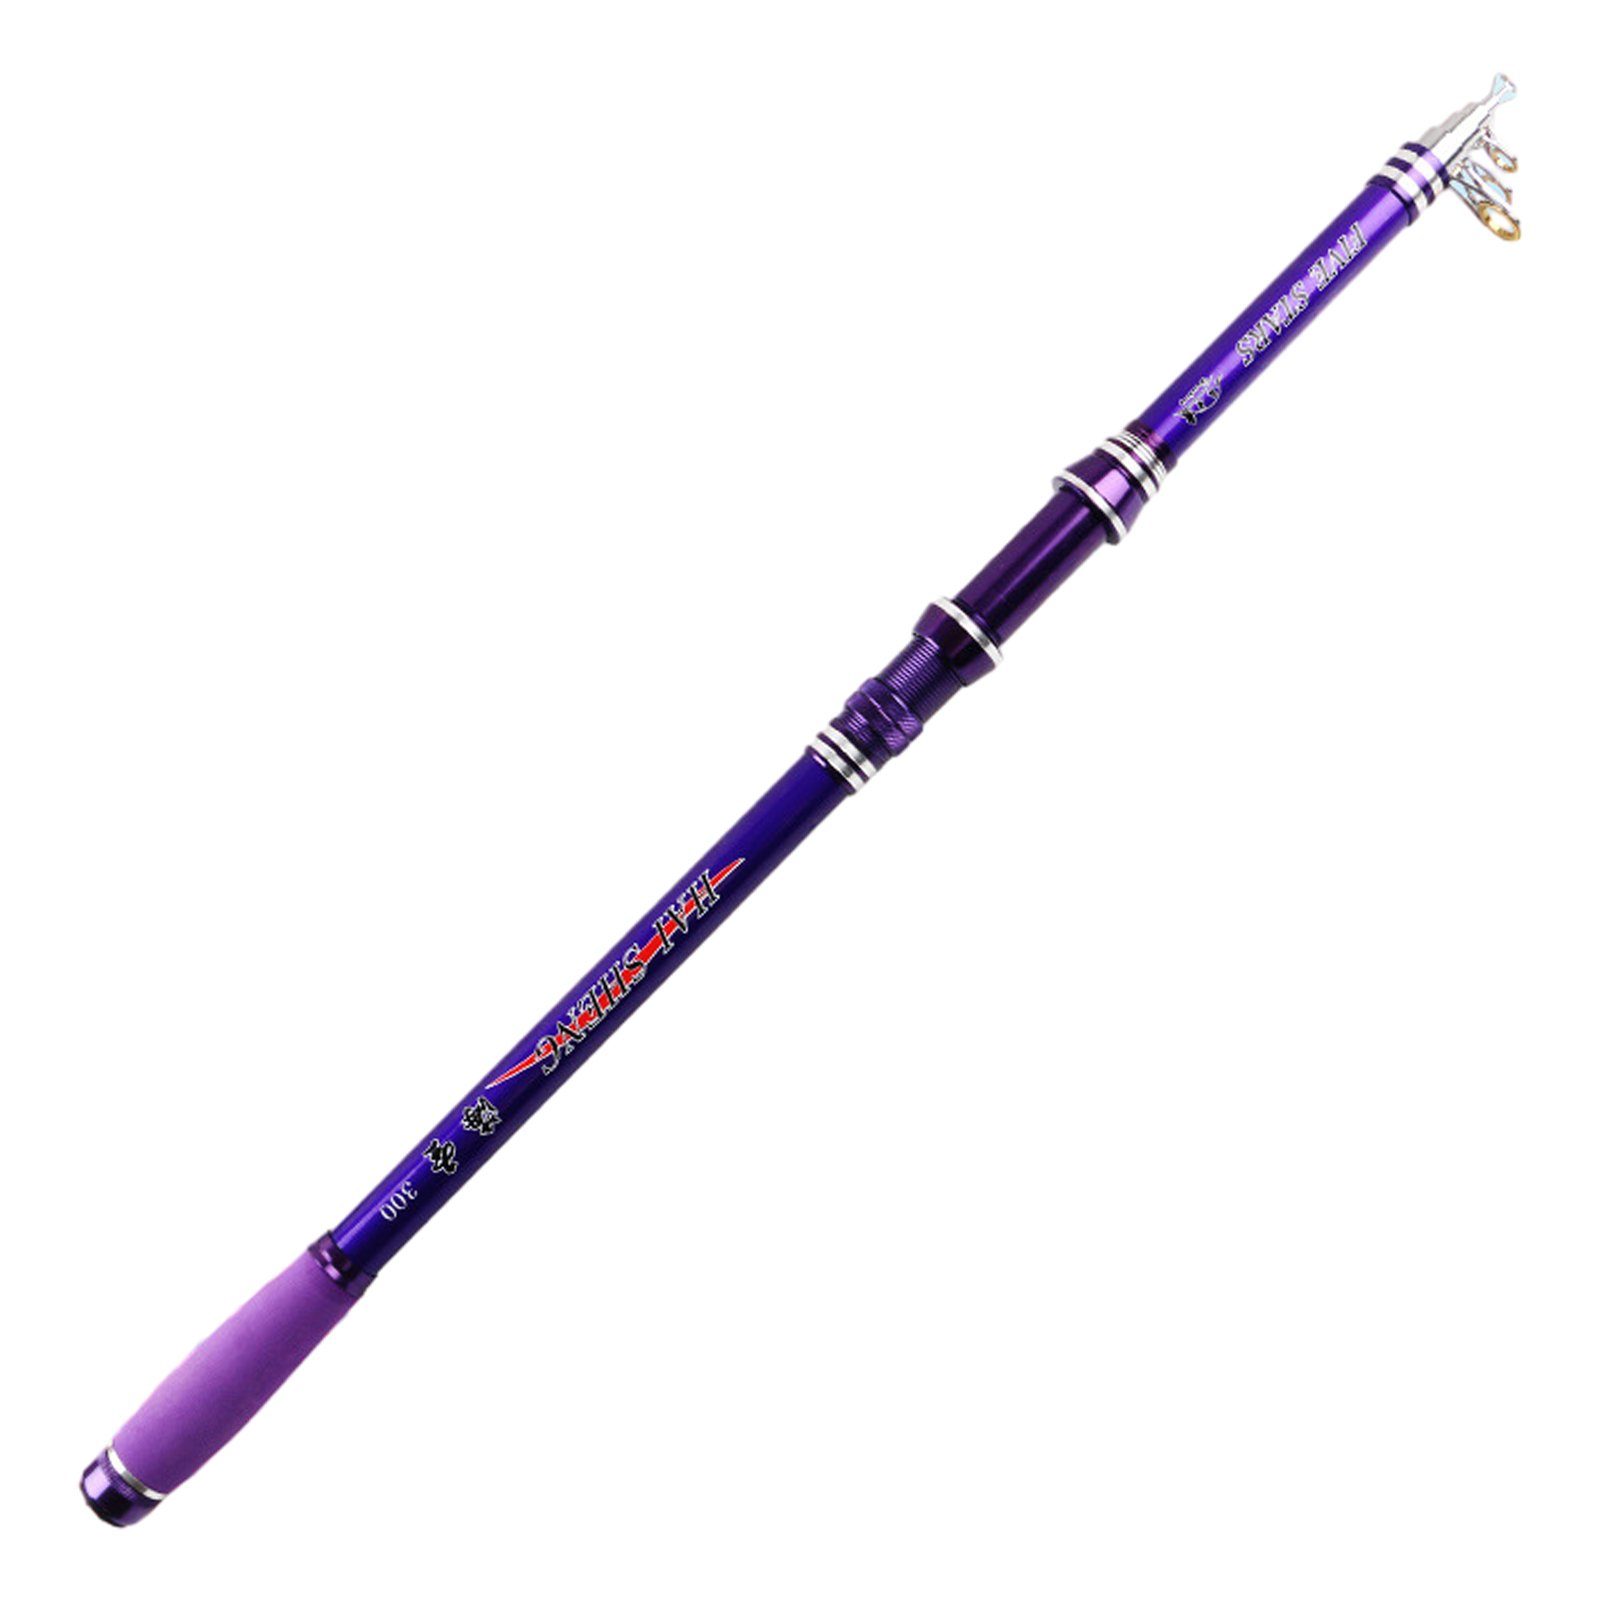 Blusmart Karpfenrute Teleskopische, Ultraleichte Angelrute, Langlebige purple